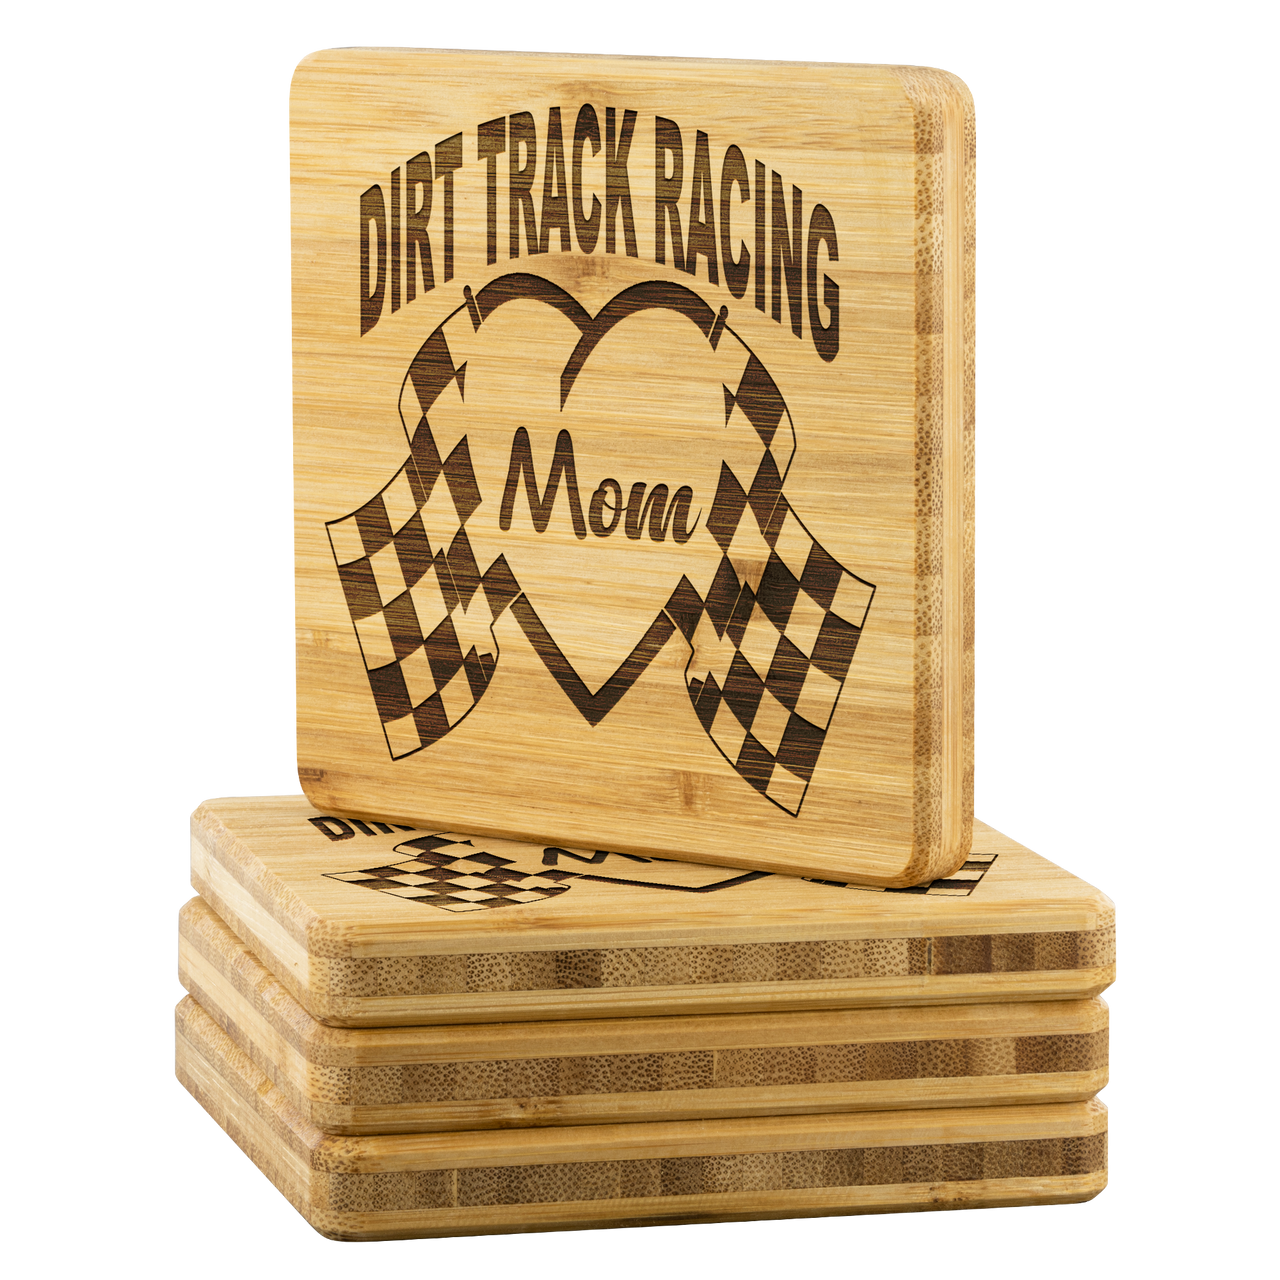 Dirt Track Racing mom Bamboo Coaster